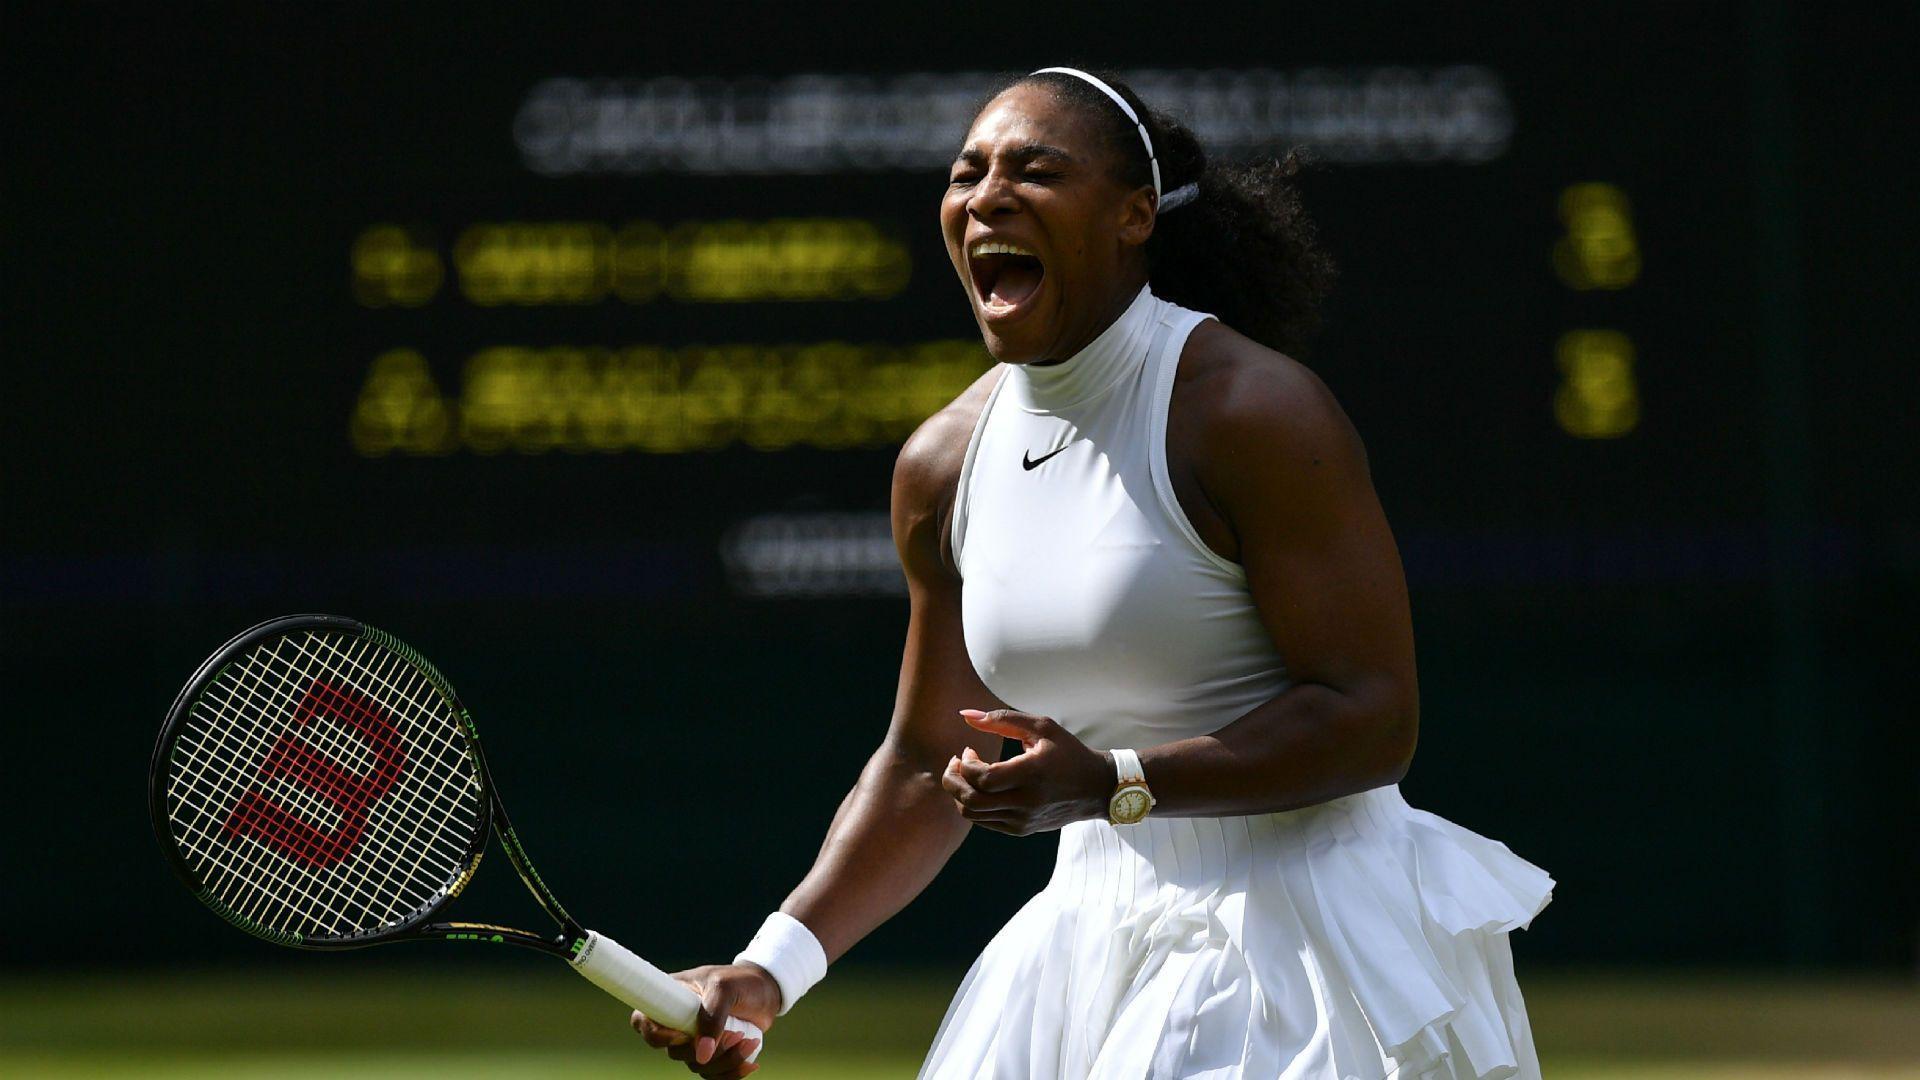 Tennis. Serena Williams eases into Wimbledon semis